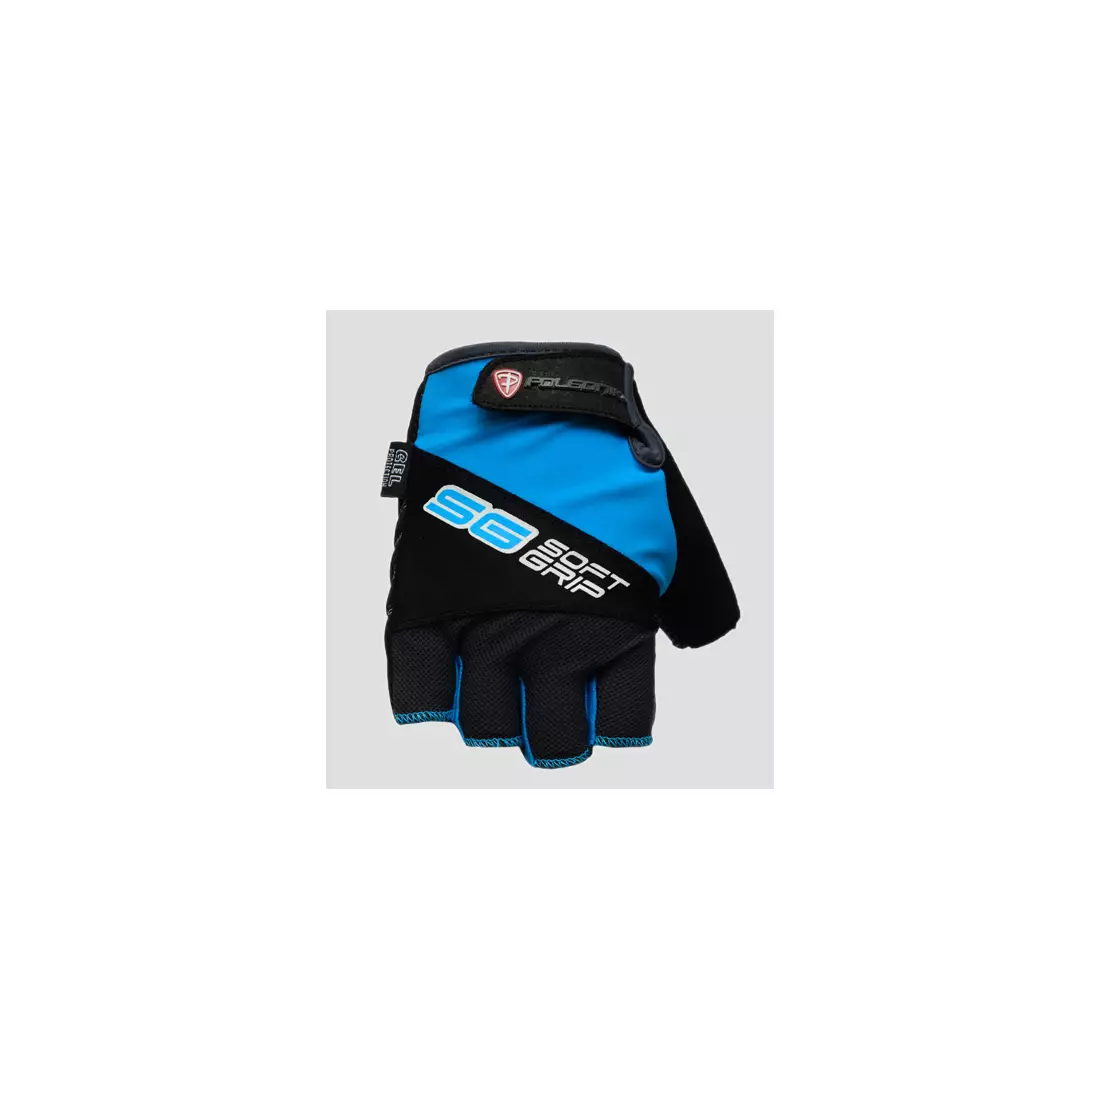 POLEDNIK SOFTGRIP NEW14 cyklistické rukavice, farba: Modrá